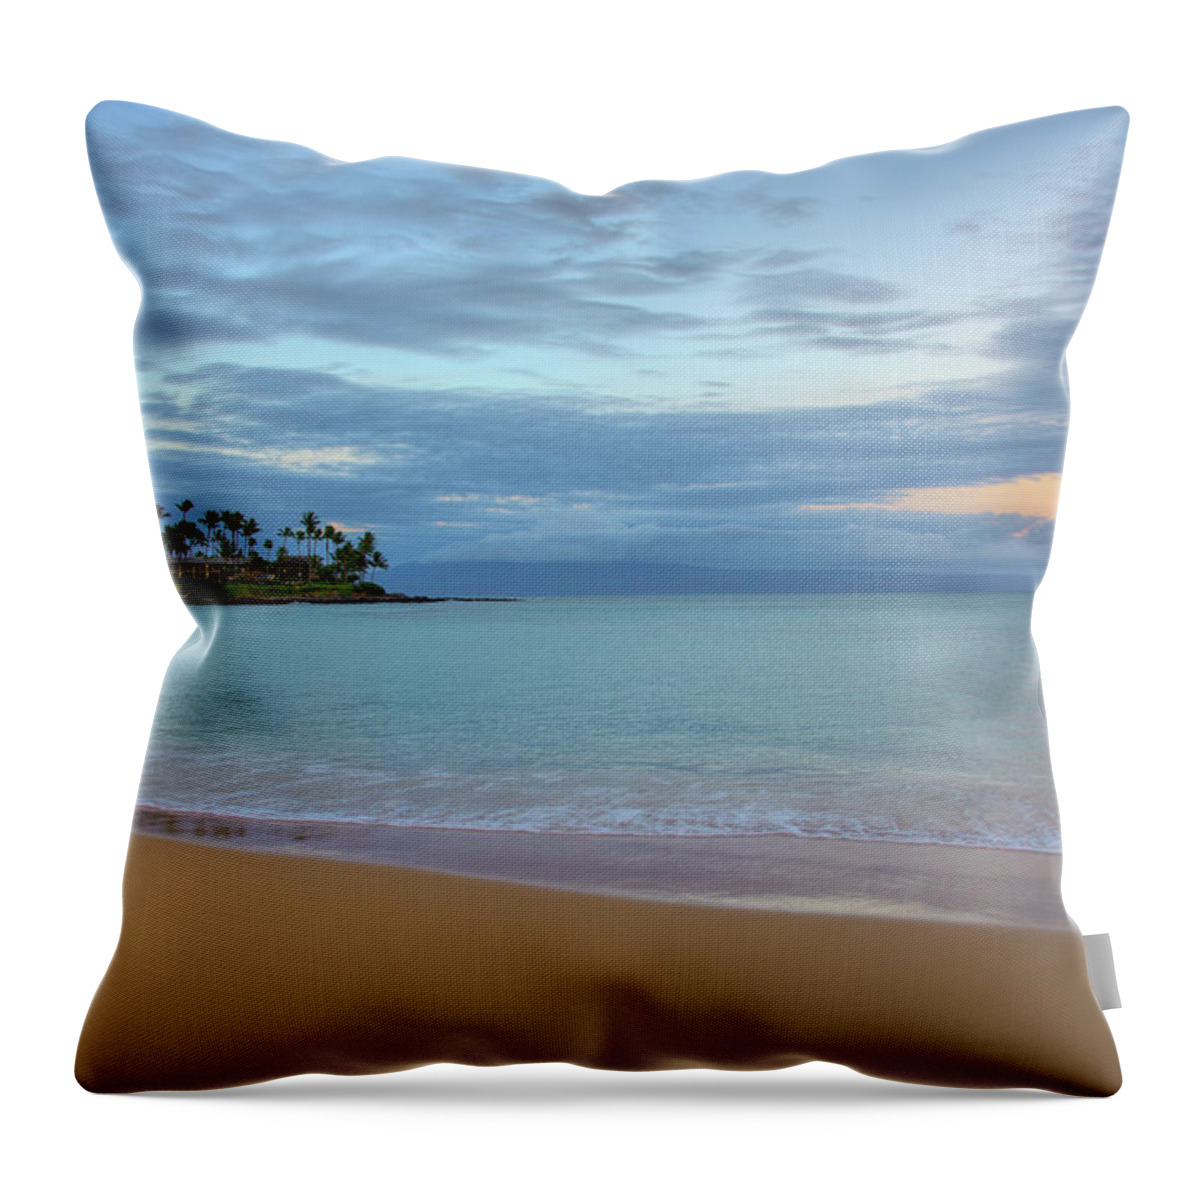 Napili Bay Sunrise Throw Pillow featuring the photograph Napili Bay Sunrise by Kelly Wade